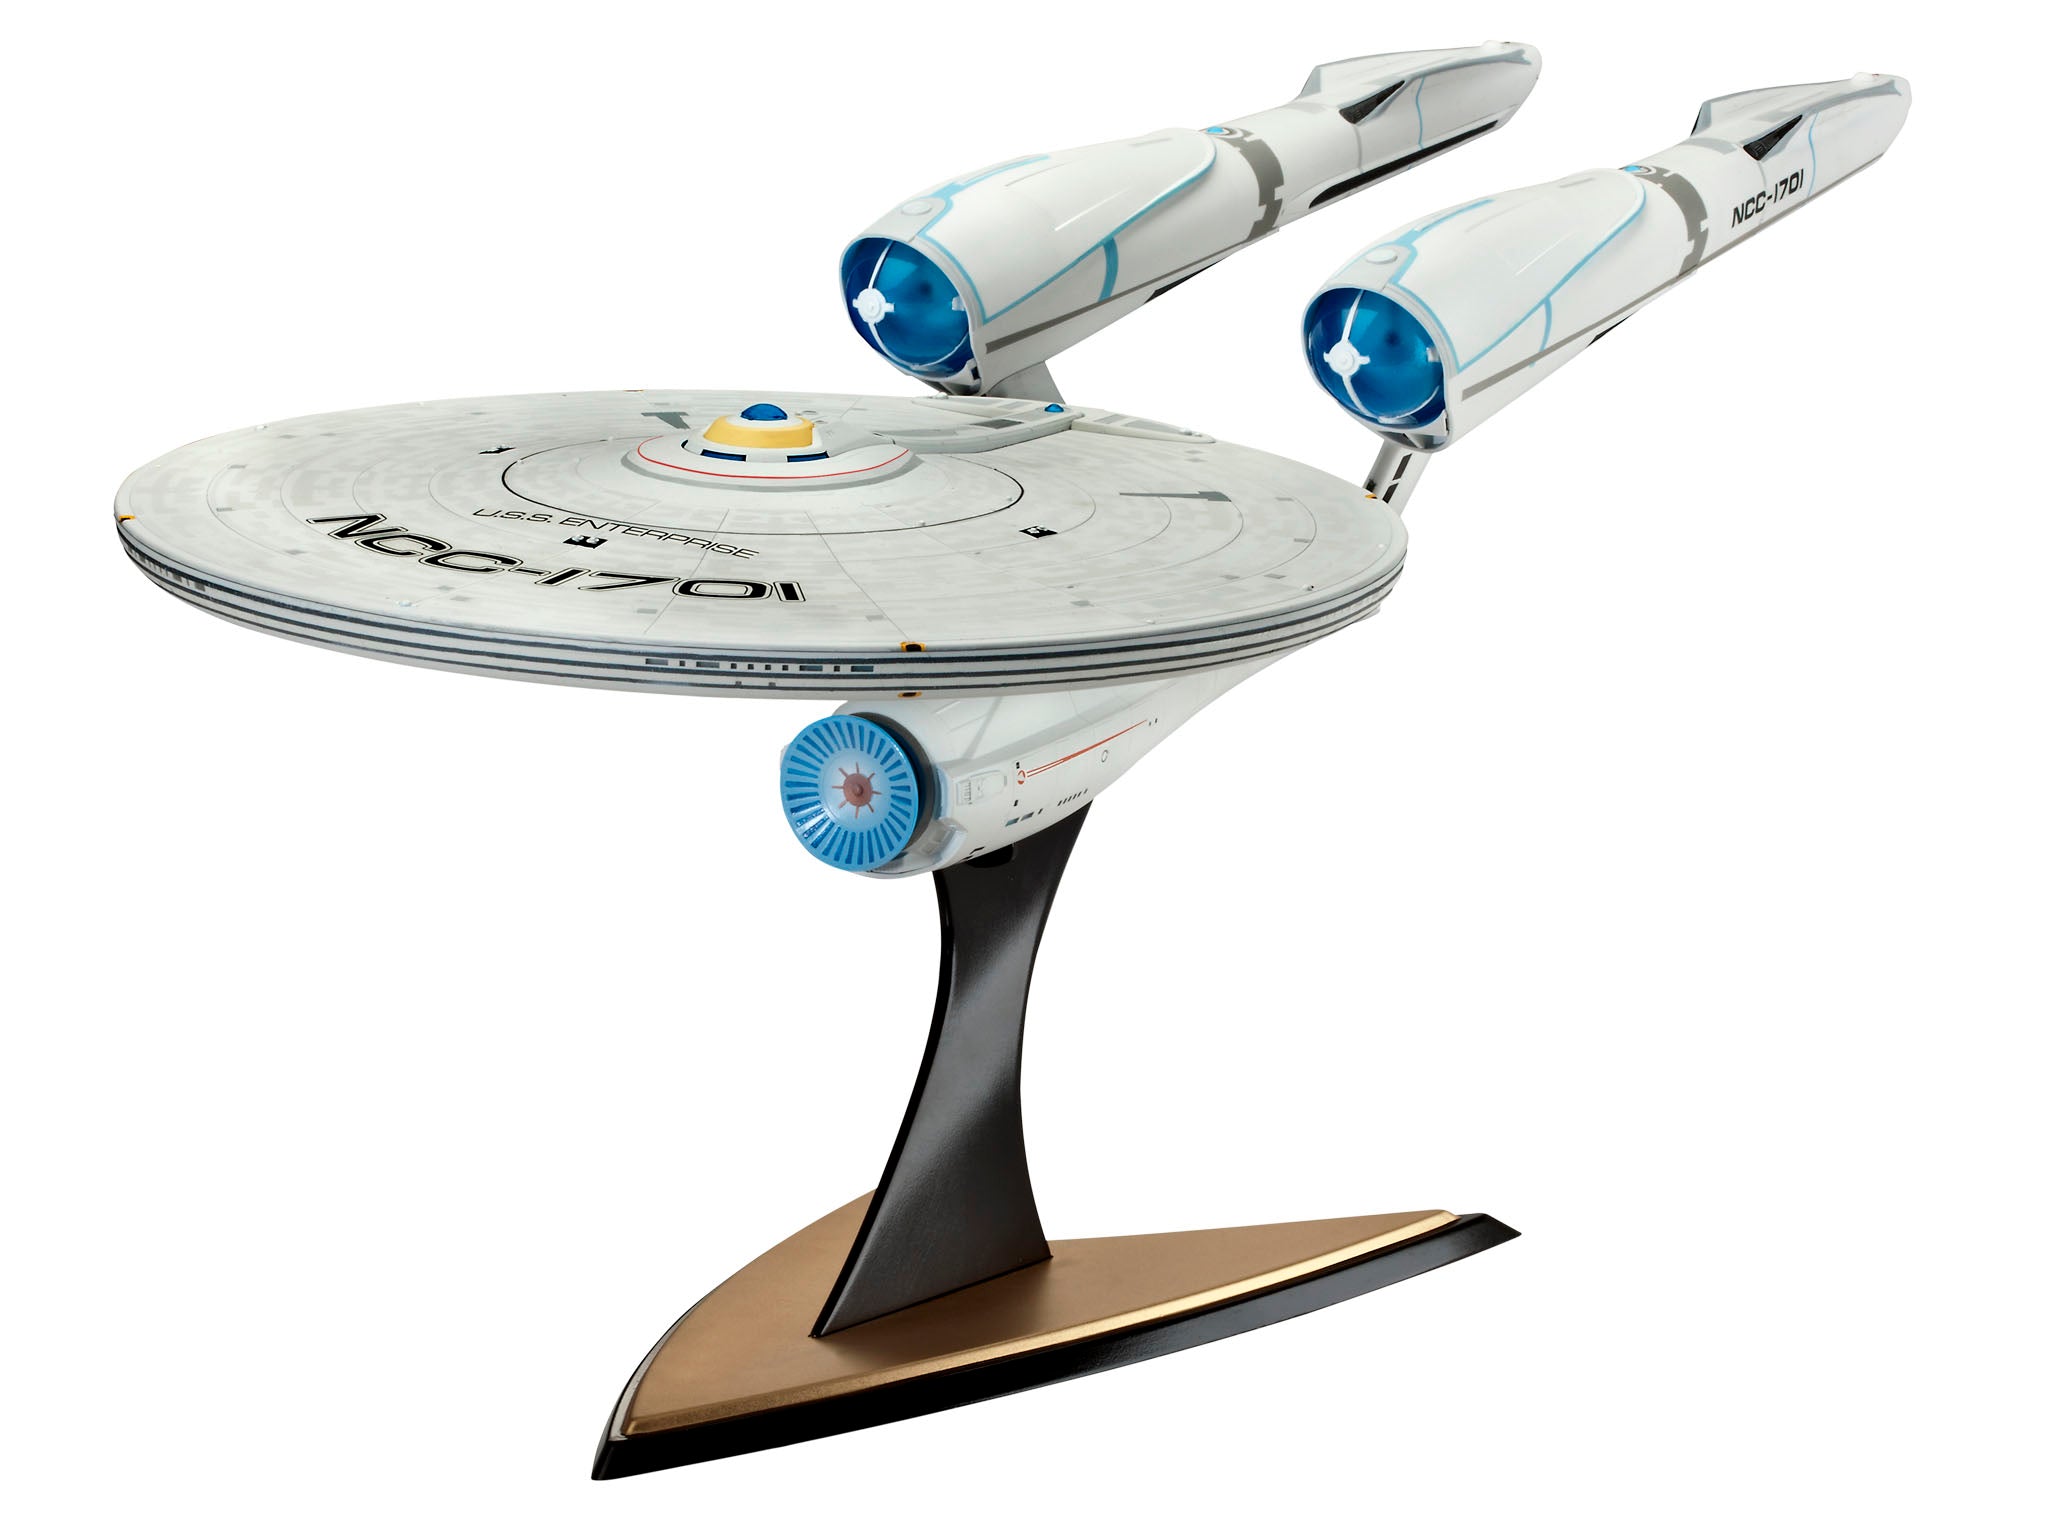 USS Enterprise NCC-1701 "Star Trek: Into Darkness" - Loaded Dice Barry Vale of Glamorgan CF64 3HD